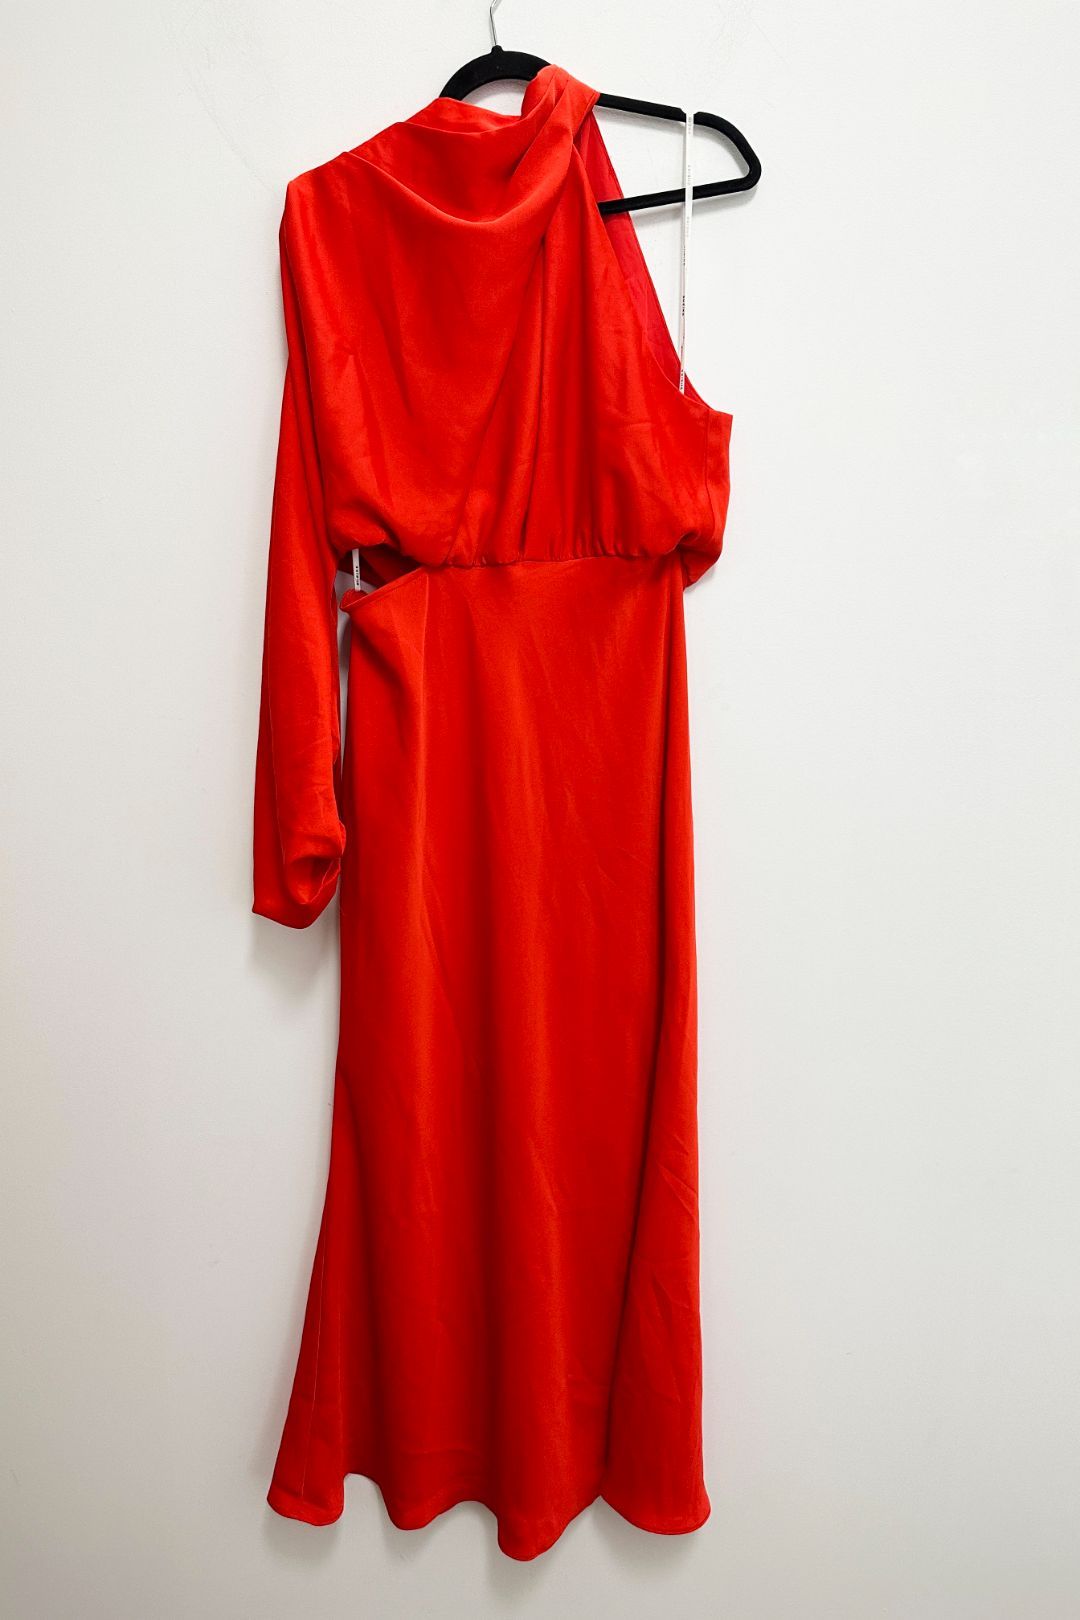 Sheike - Olivia Maxi Dress in Red